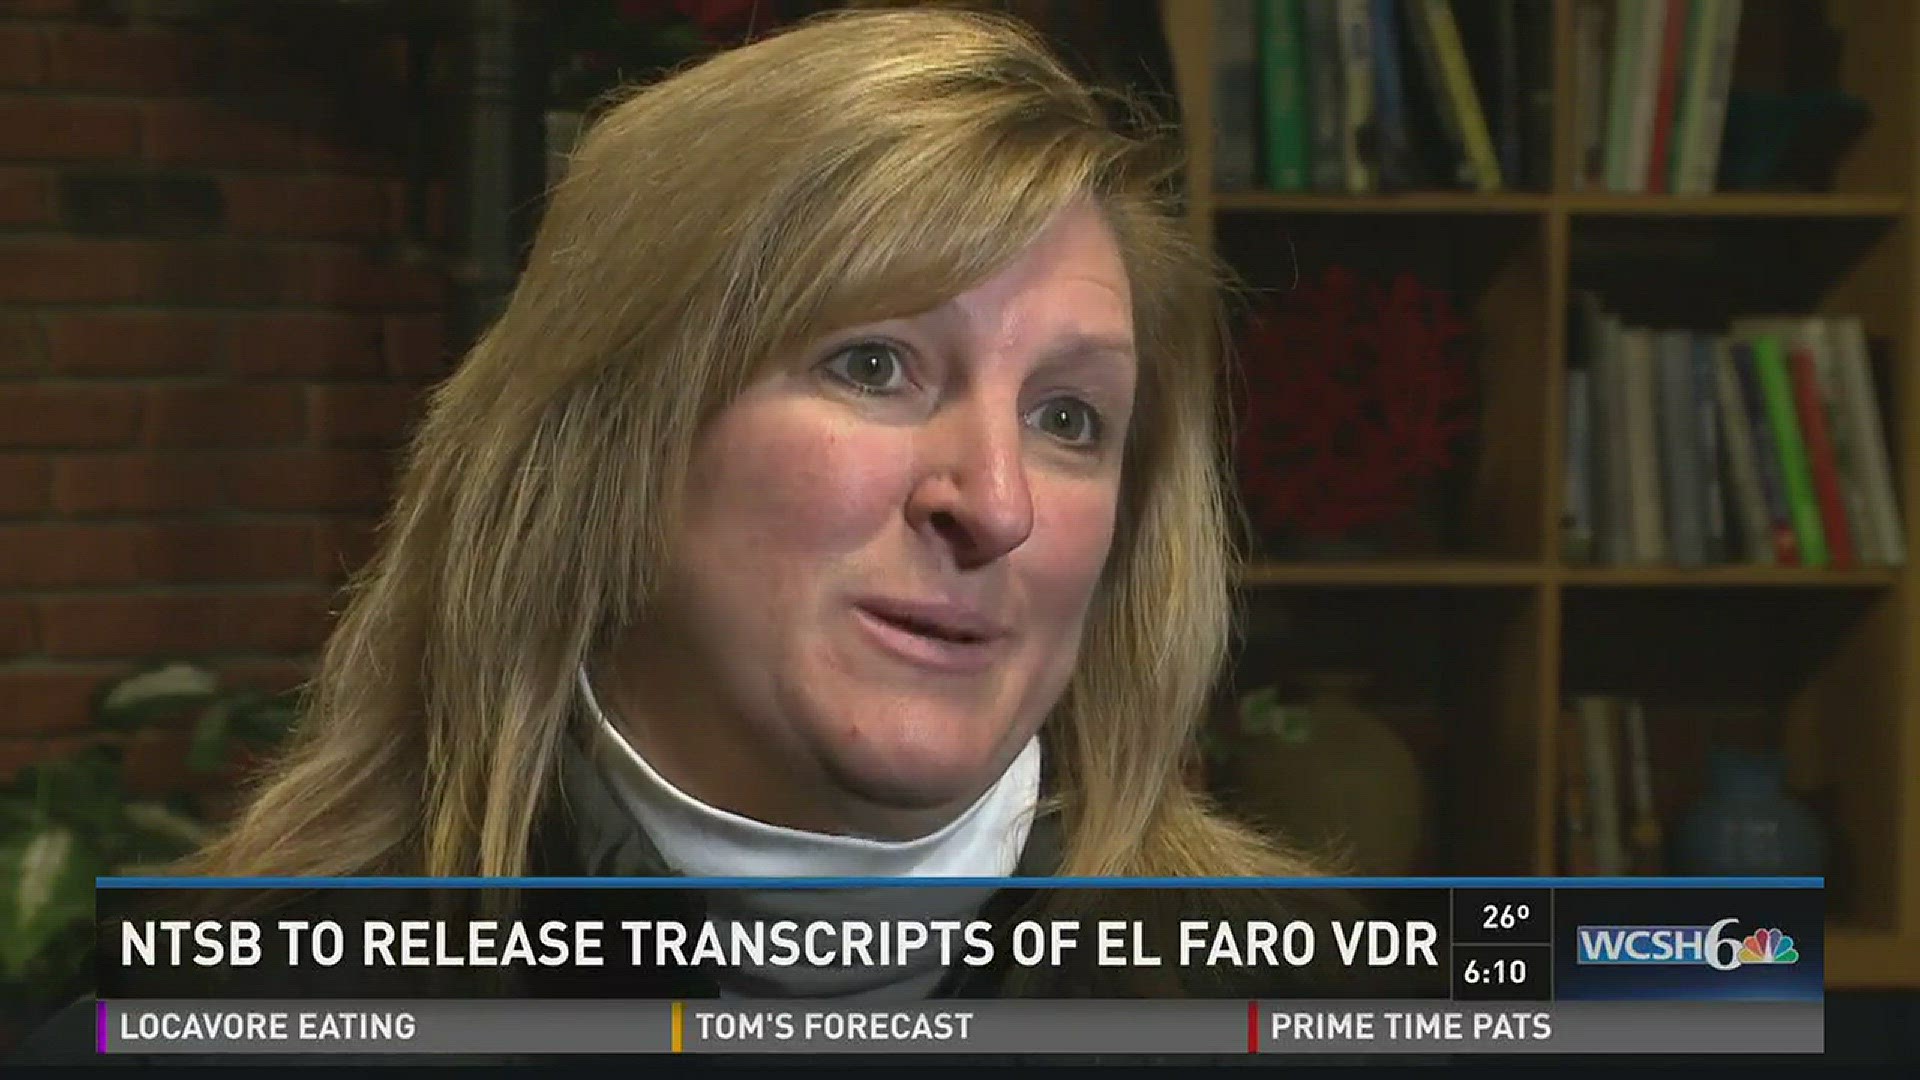 NTSB to release transcripts of El Faro VDR